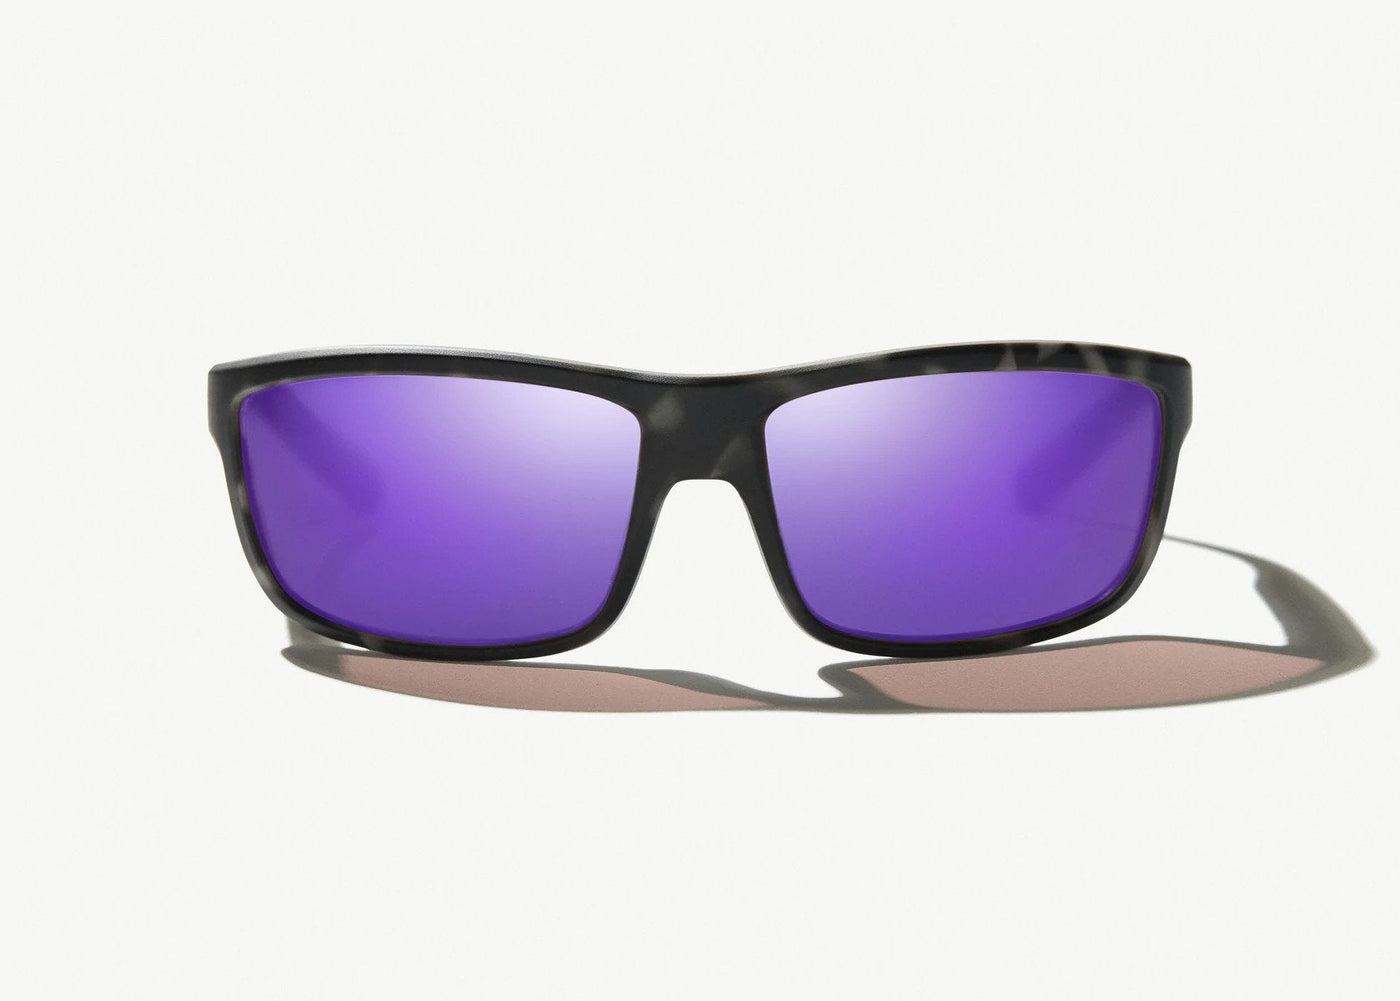 Bajio Sunglasses - Polycarbonate Lenses Apparel Bajio Sunglasses Nippers Squall Tortoise Matte Violet Mirror